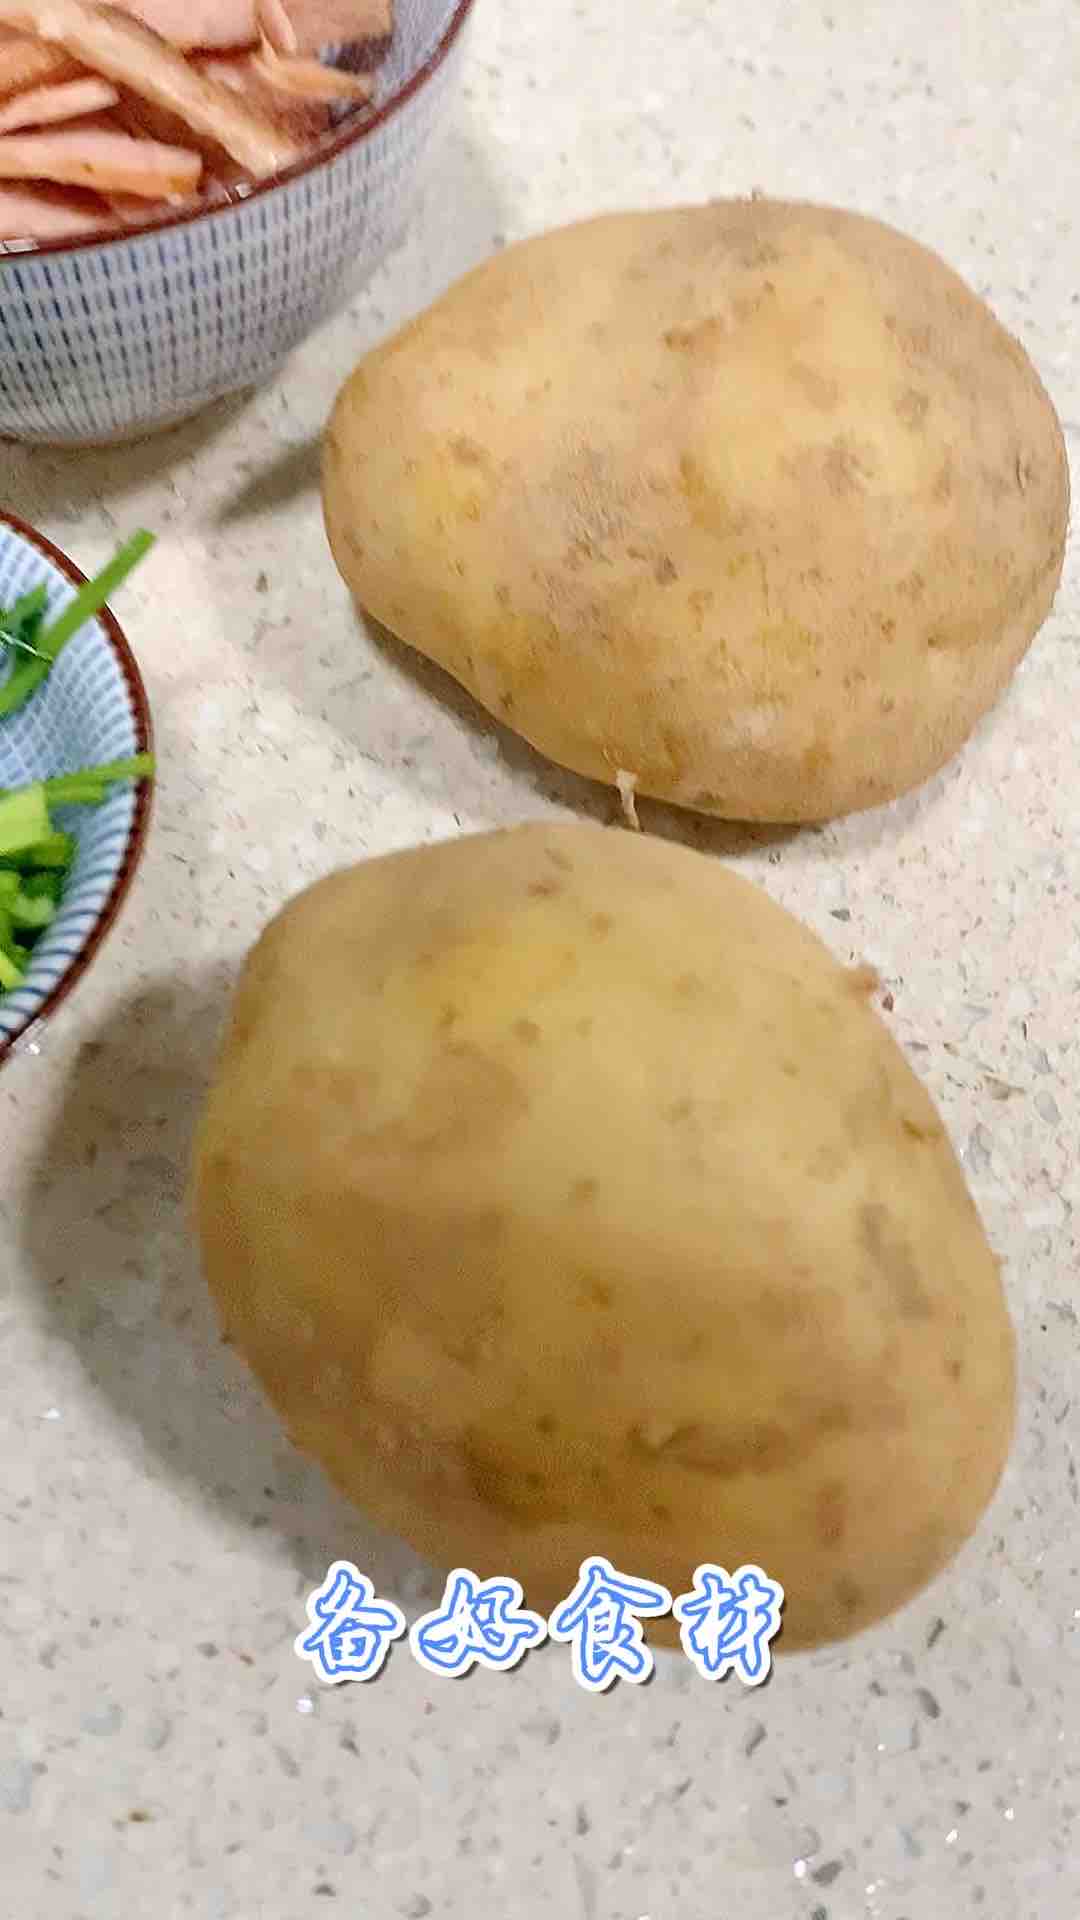 Stir-fried Shredded Potato with Luncheon Meat recipe